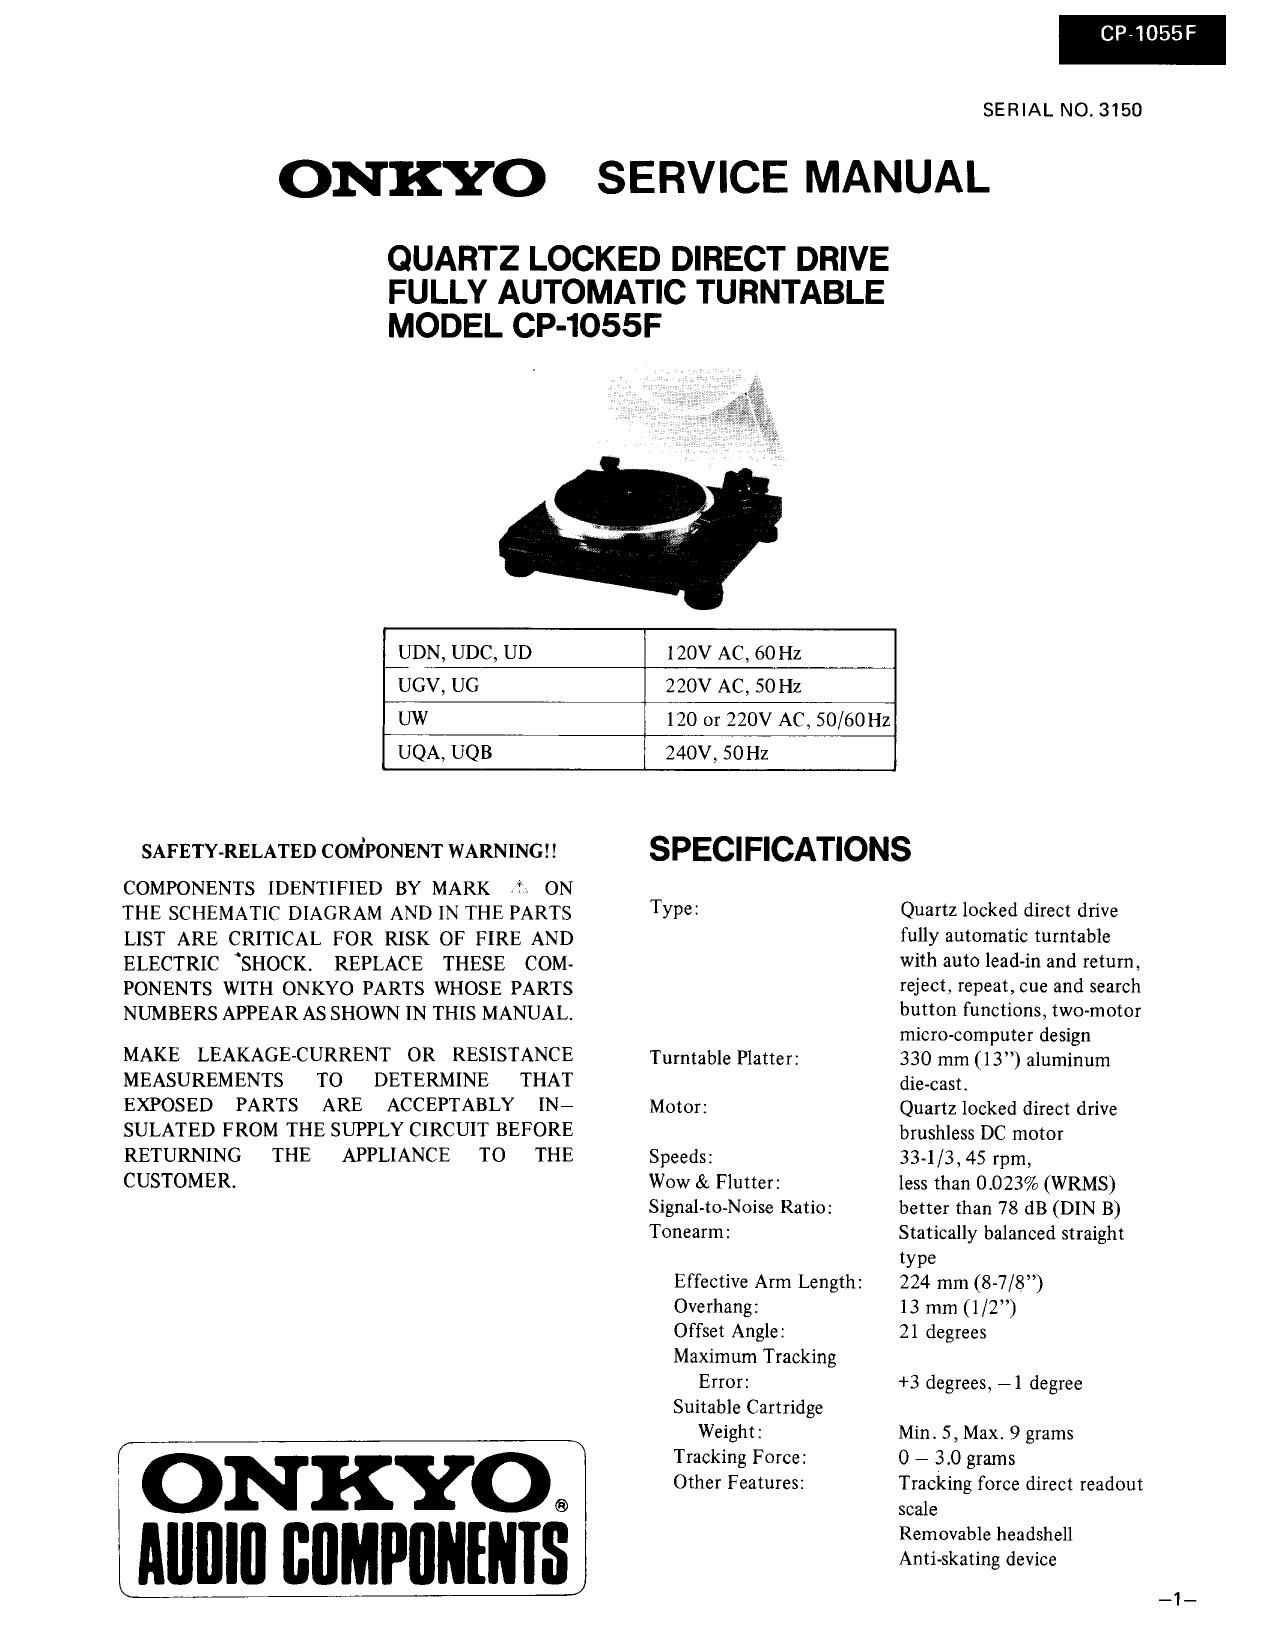 Onkyo CP 1055 F Service Manual